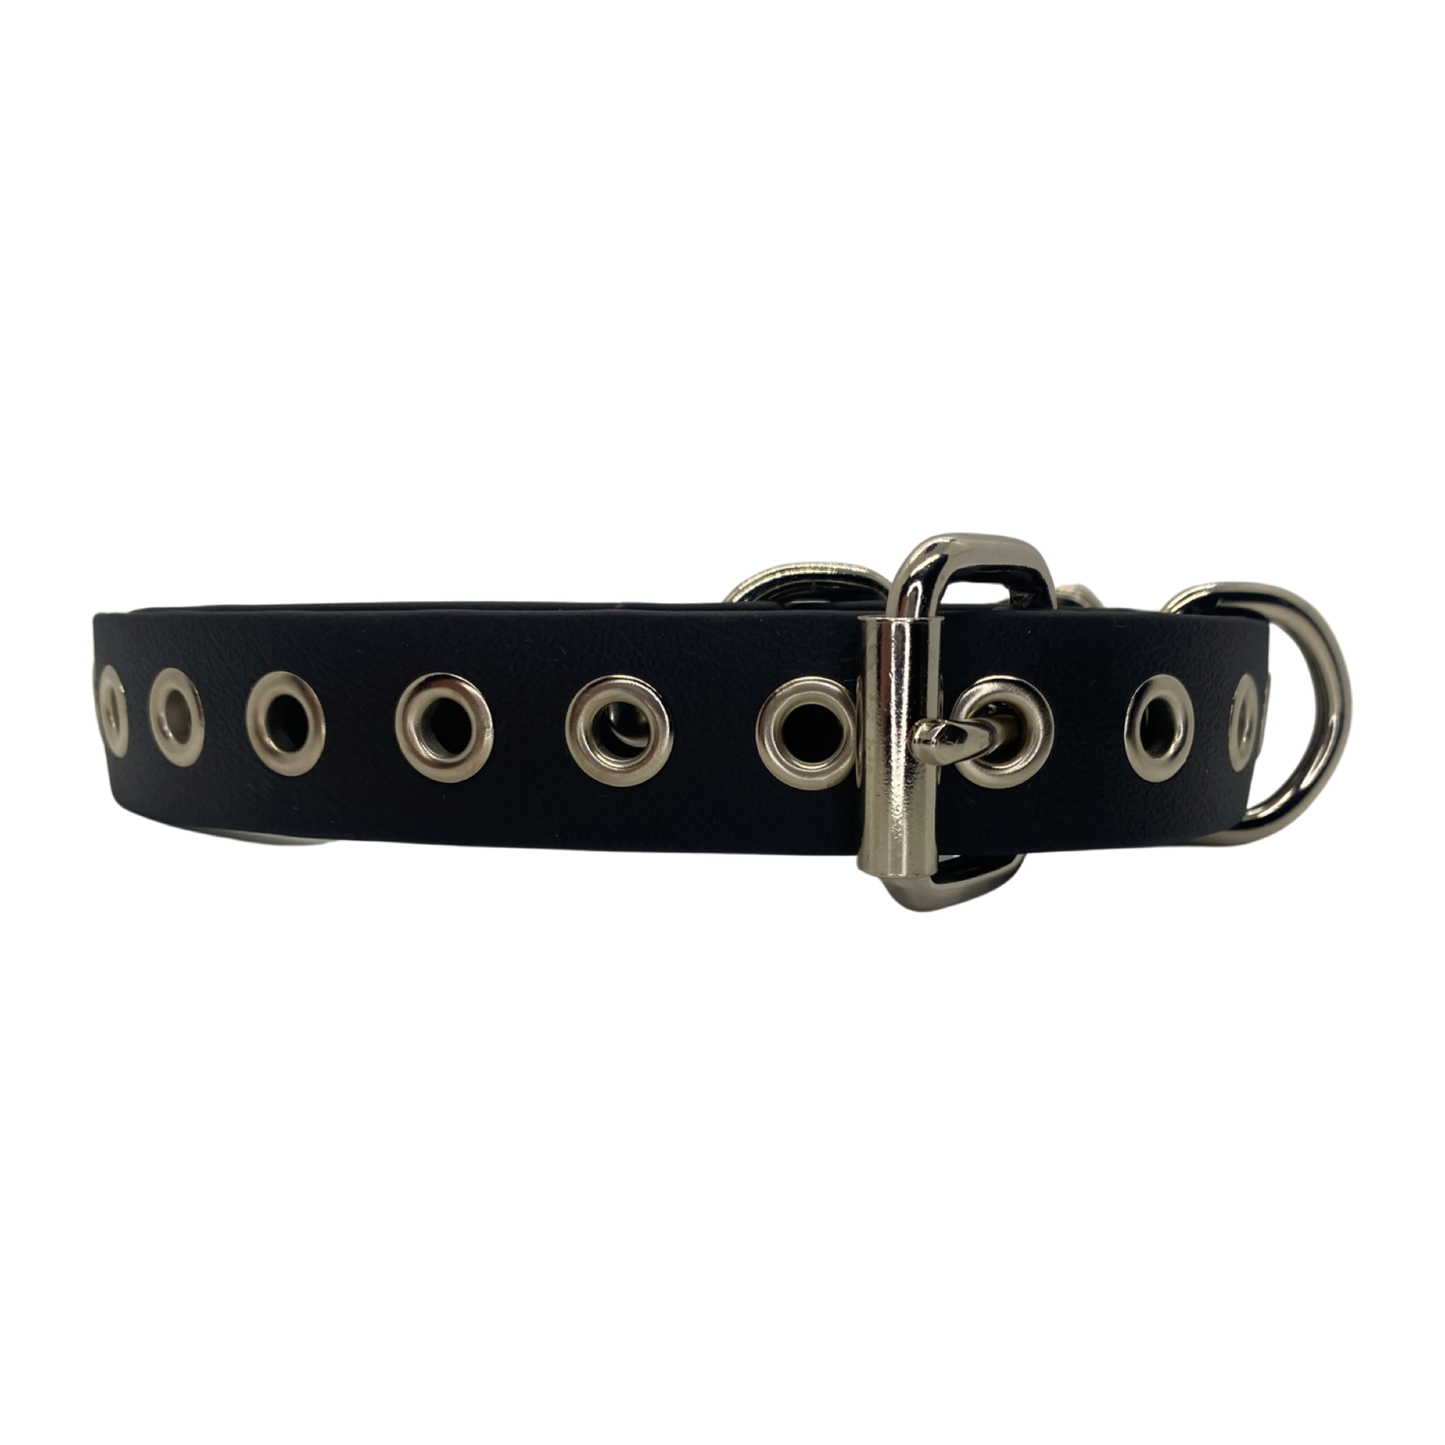 1” Vegan Hobble Belt - Restraints/ Cuffs - With Eyelets - Nickel Hardware